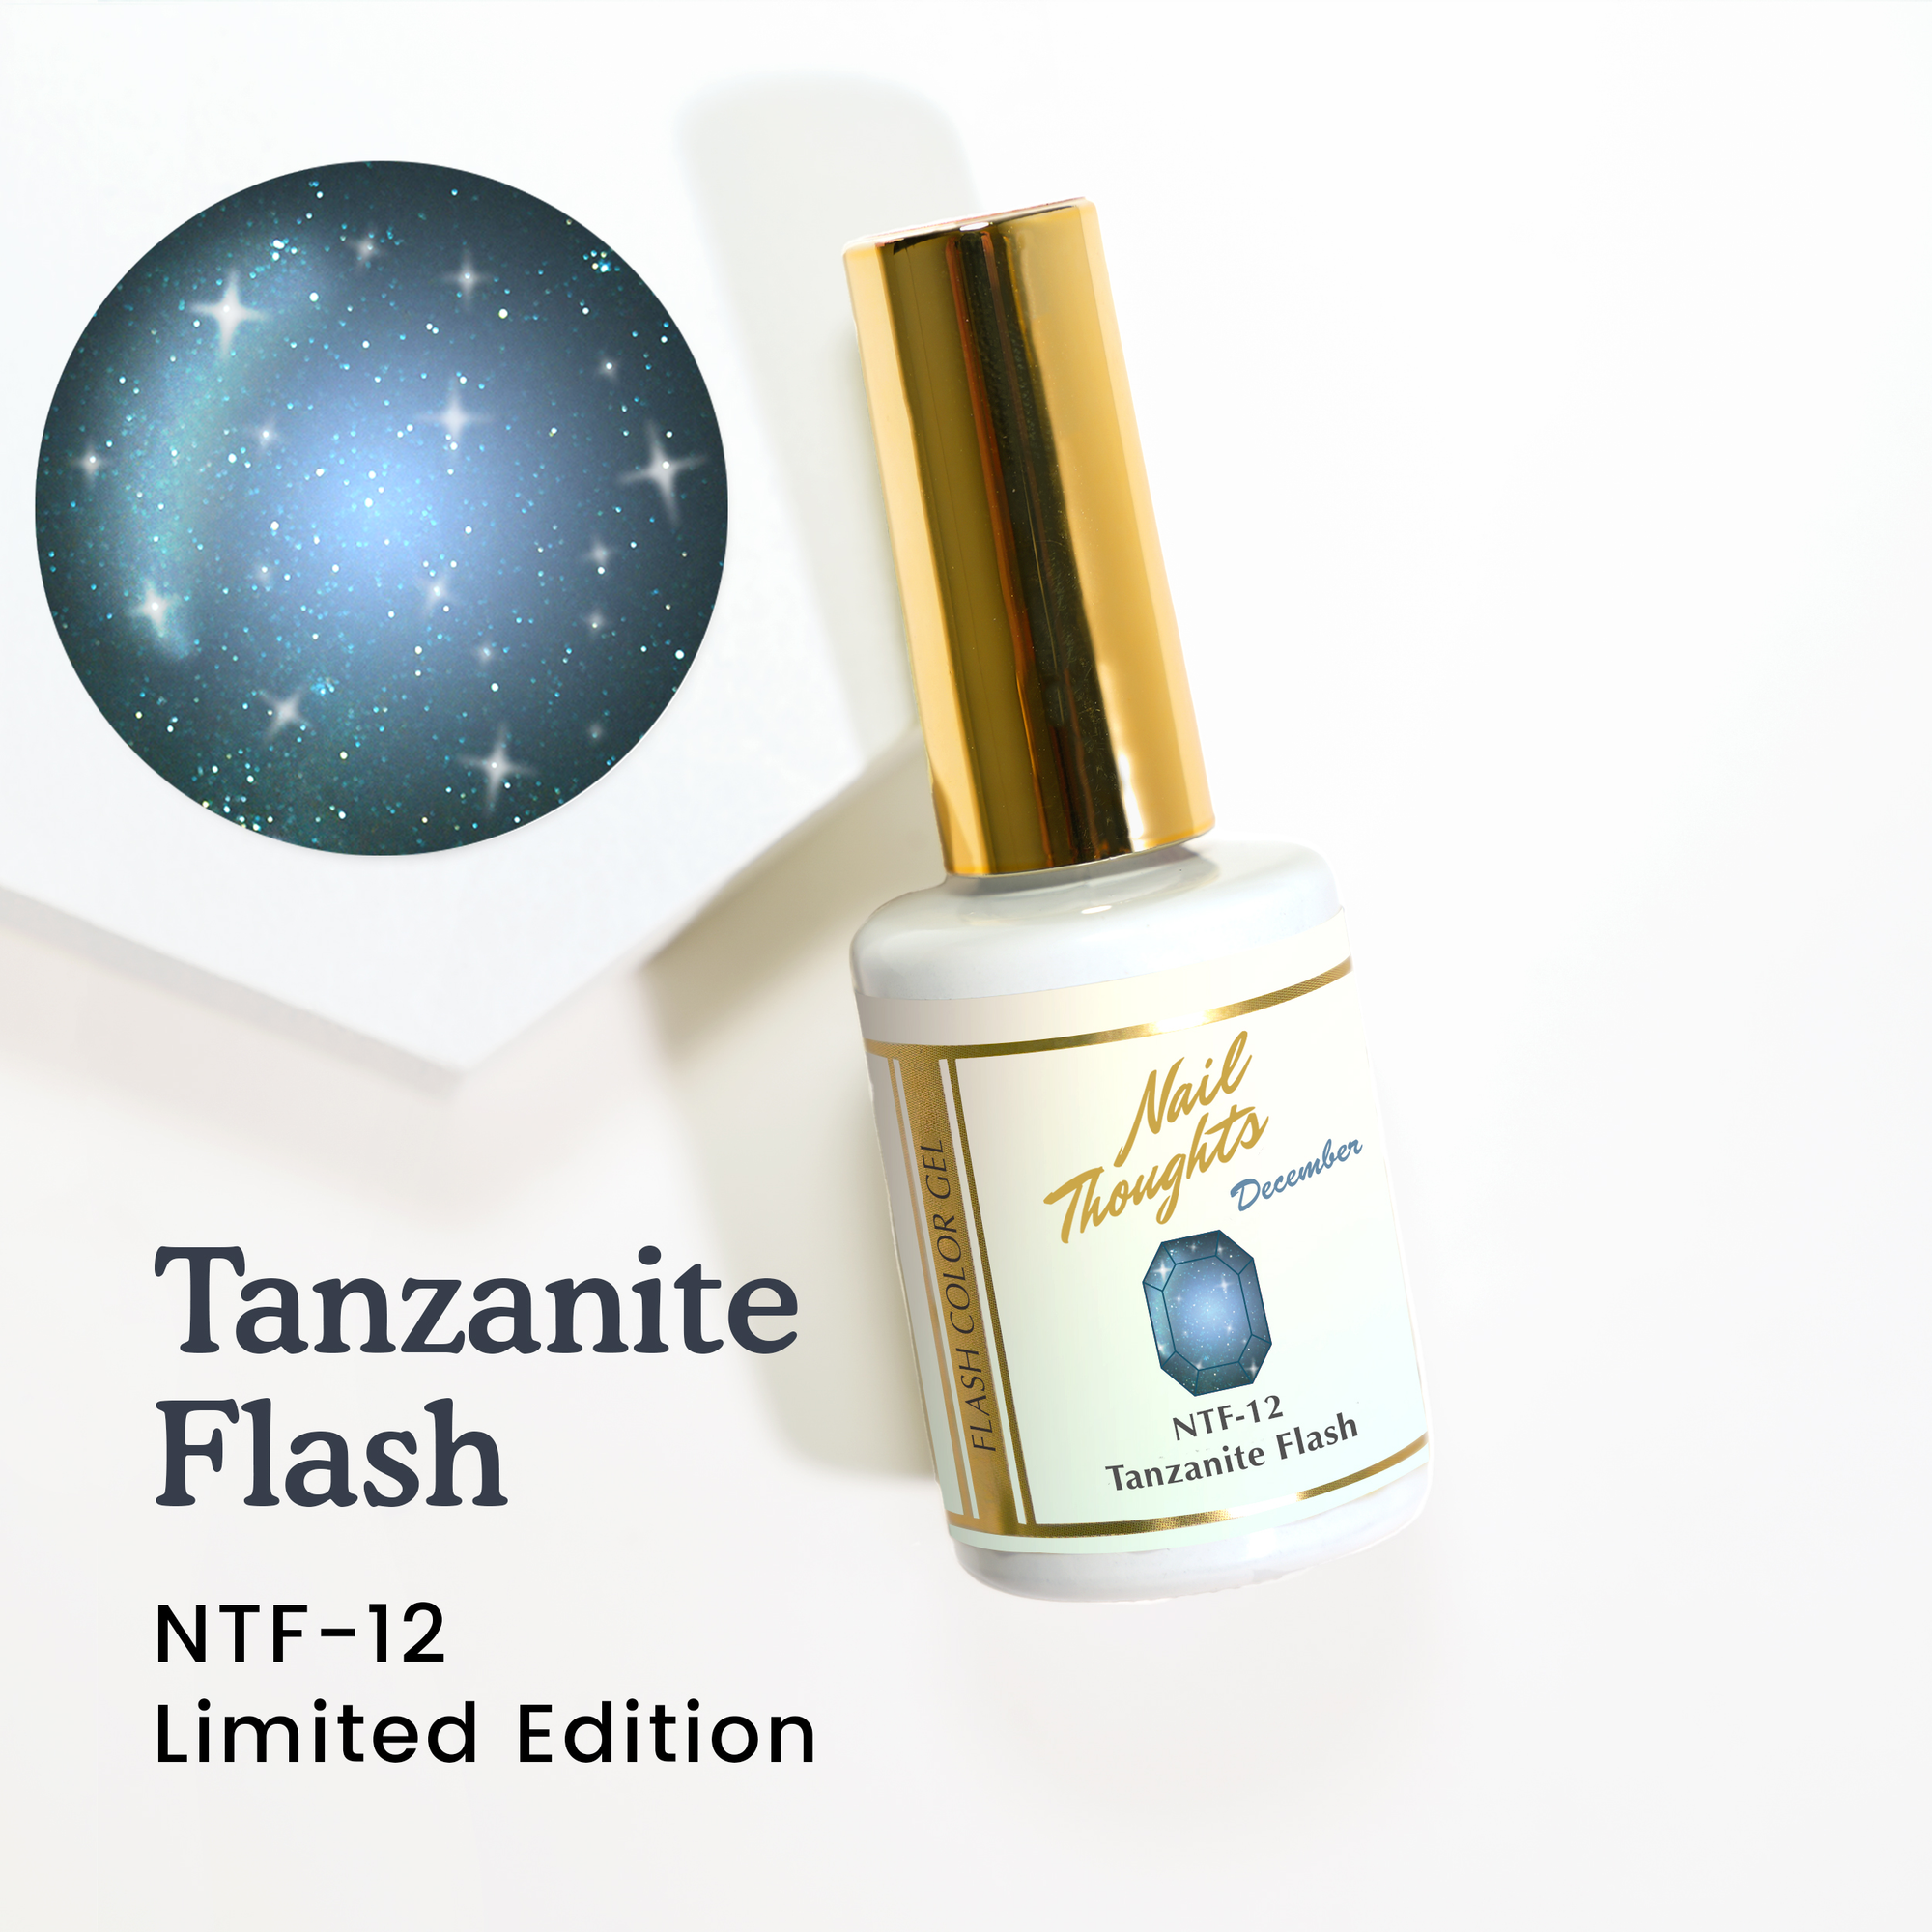 Tanzanite Flash NTF-12